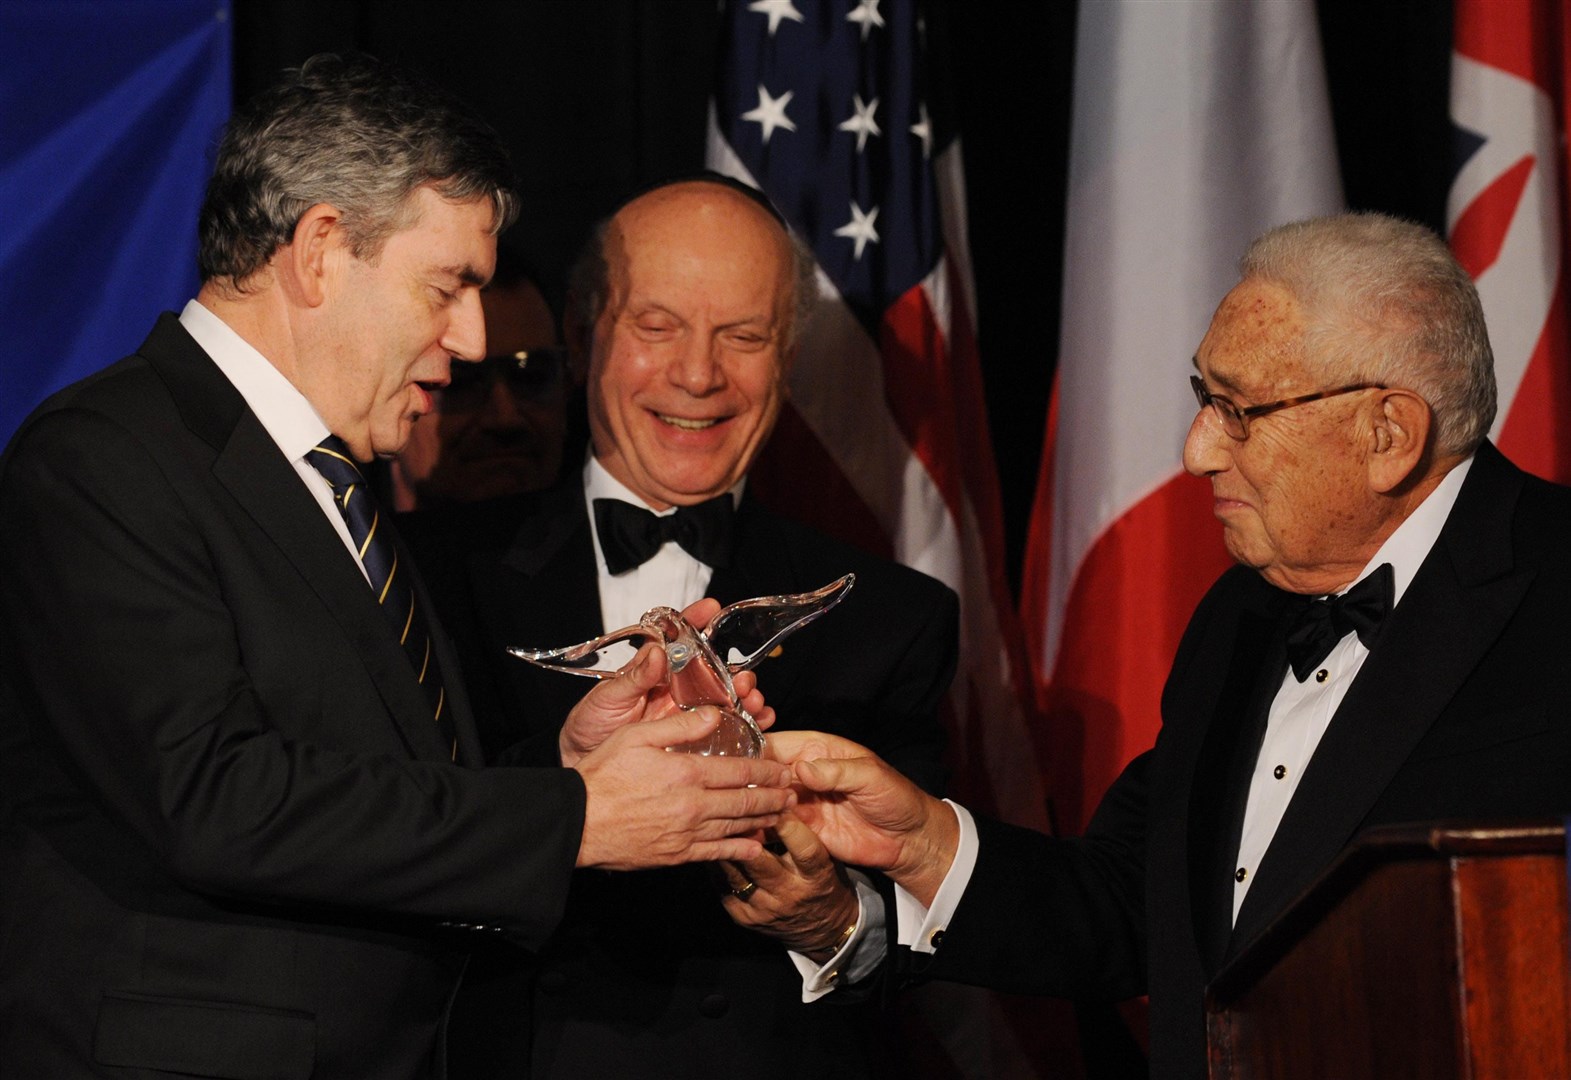 Then-prime minister Gordon Brown receiving an award from Mr Kissinger in New York in September 2009 (PA)